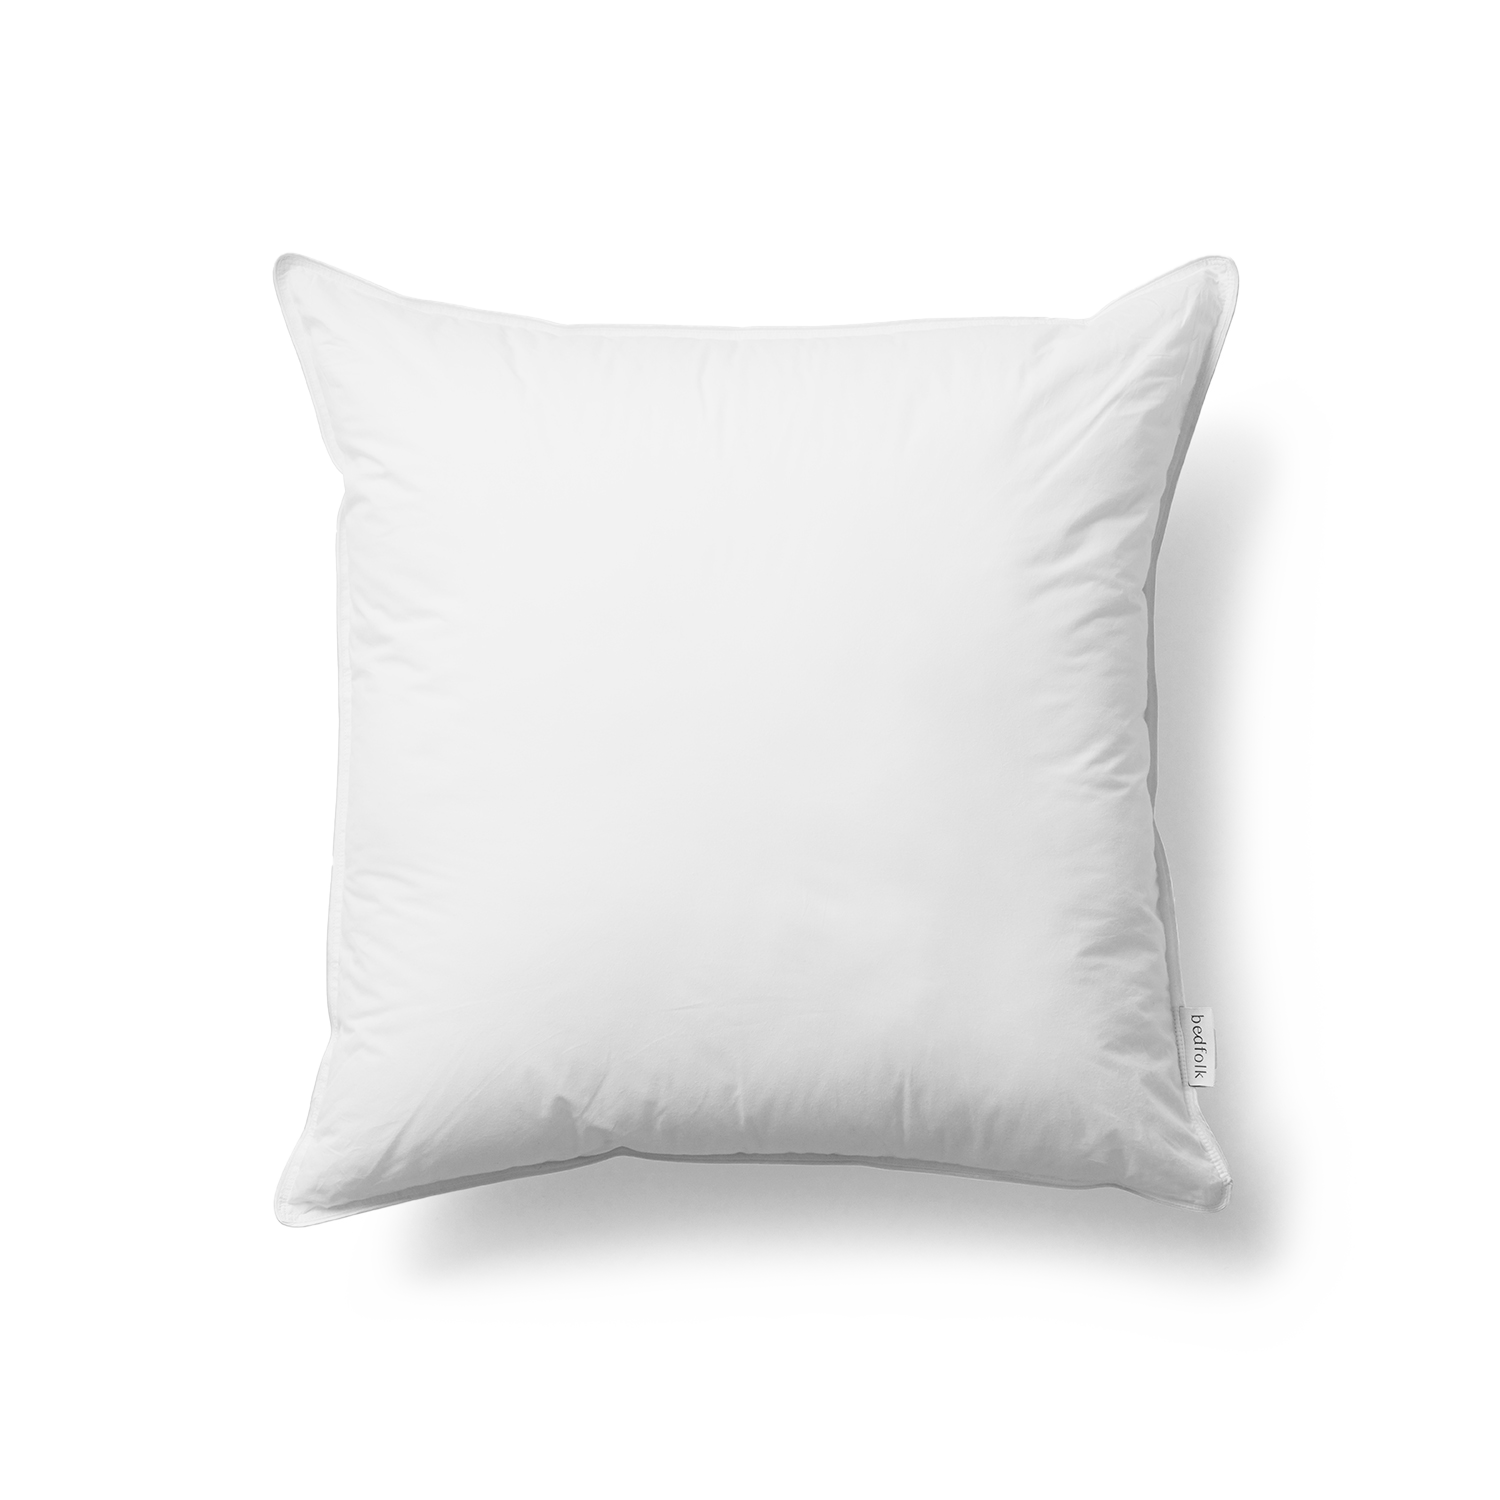 The Down Alternative Square Pillow